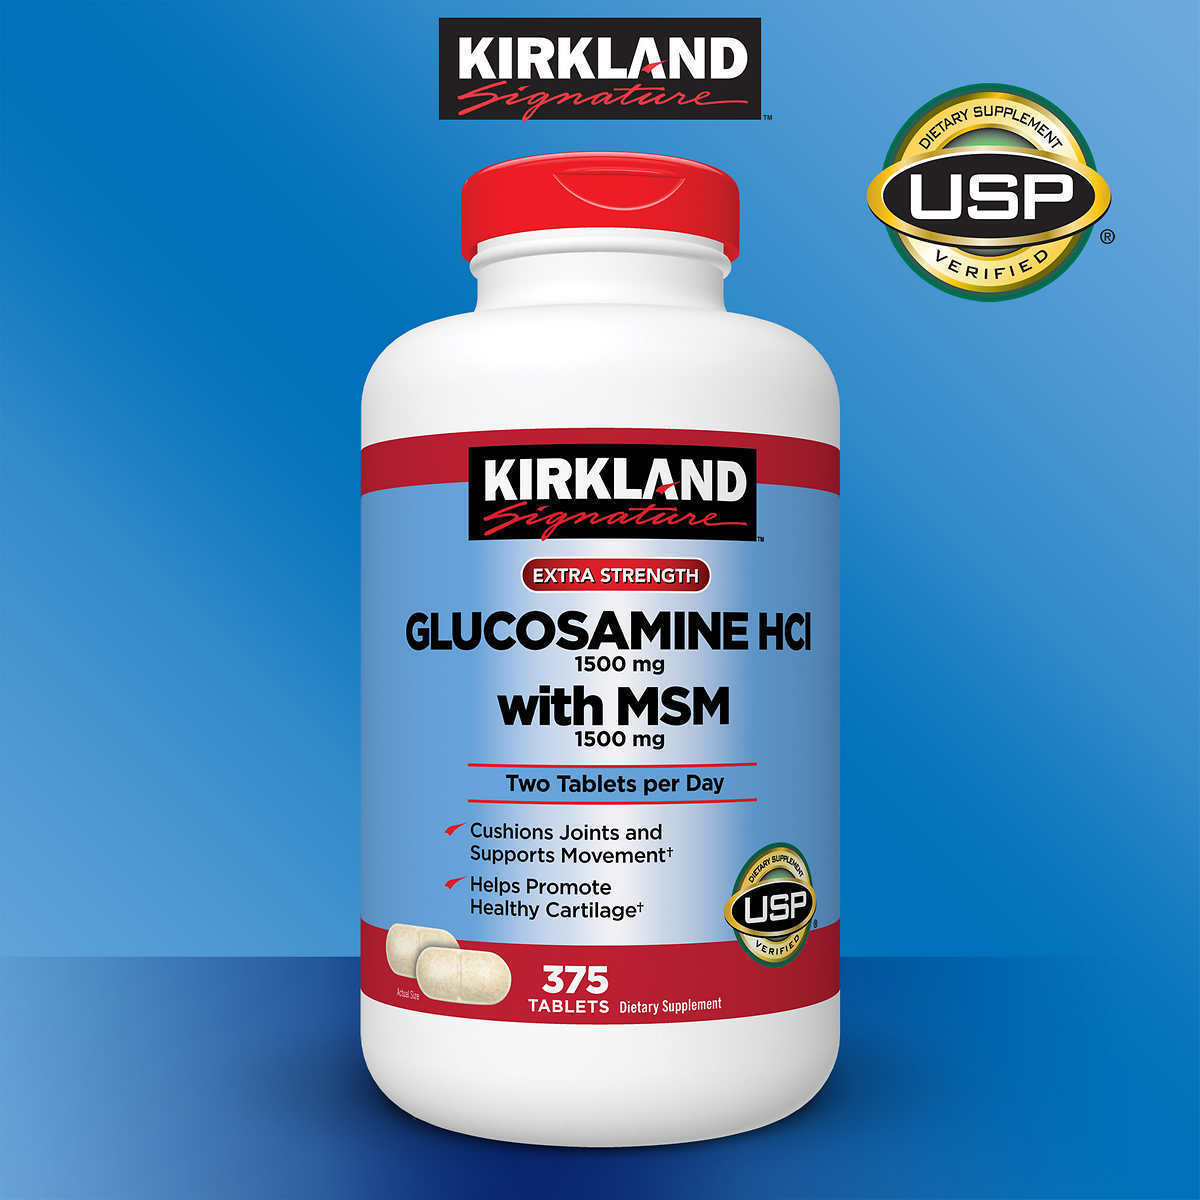 Glucosamina HCI 1500mg con MSM 1500mg Kirkland   de 375 tabletas